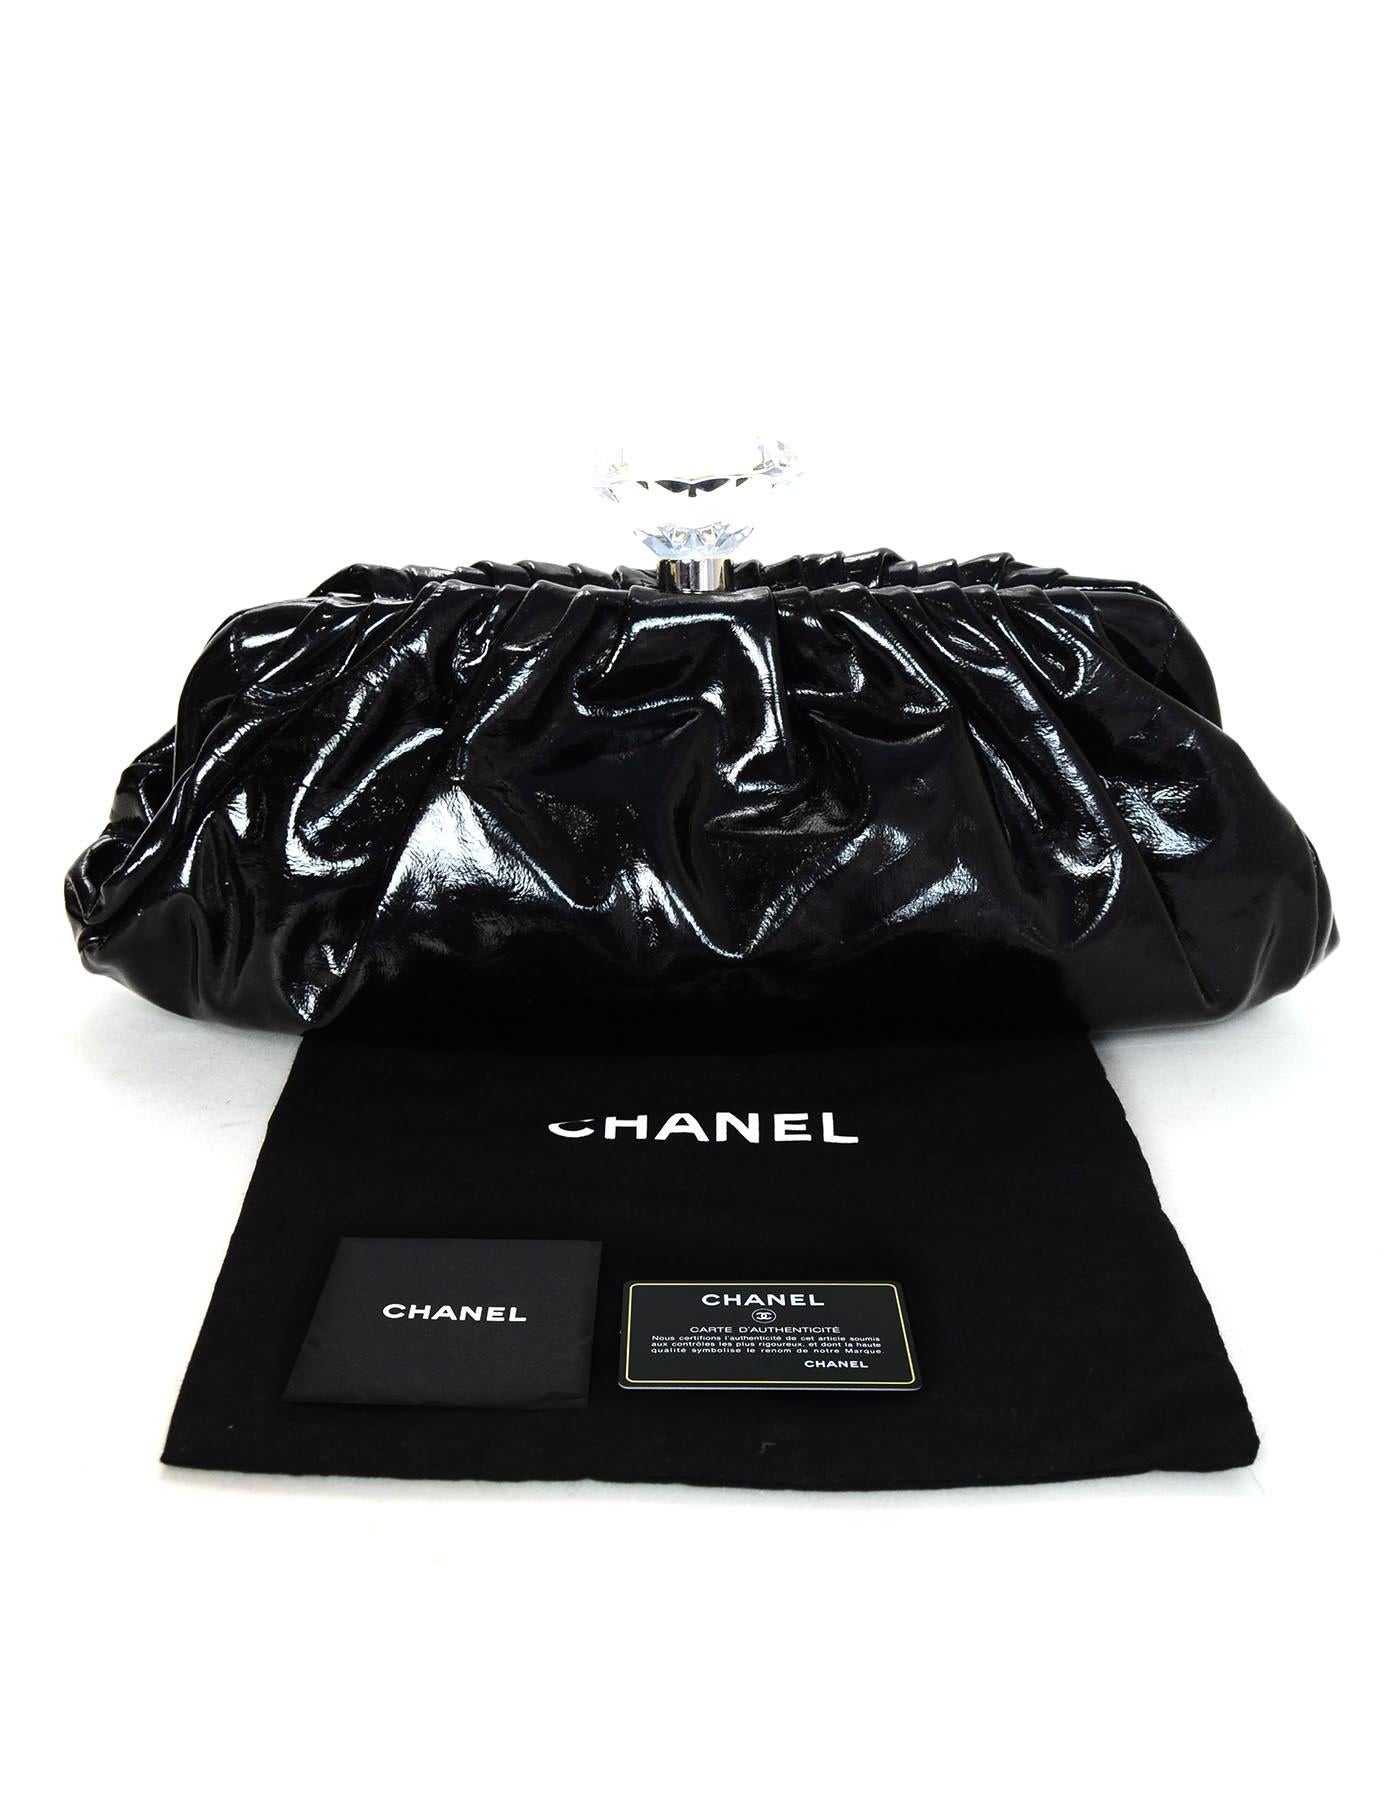 Chanel Black Patent Leather Diamond Clutch Bag 5